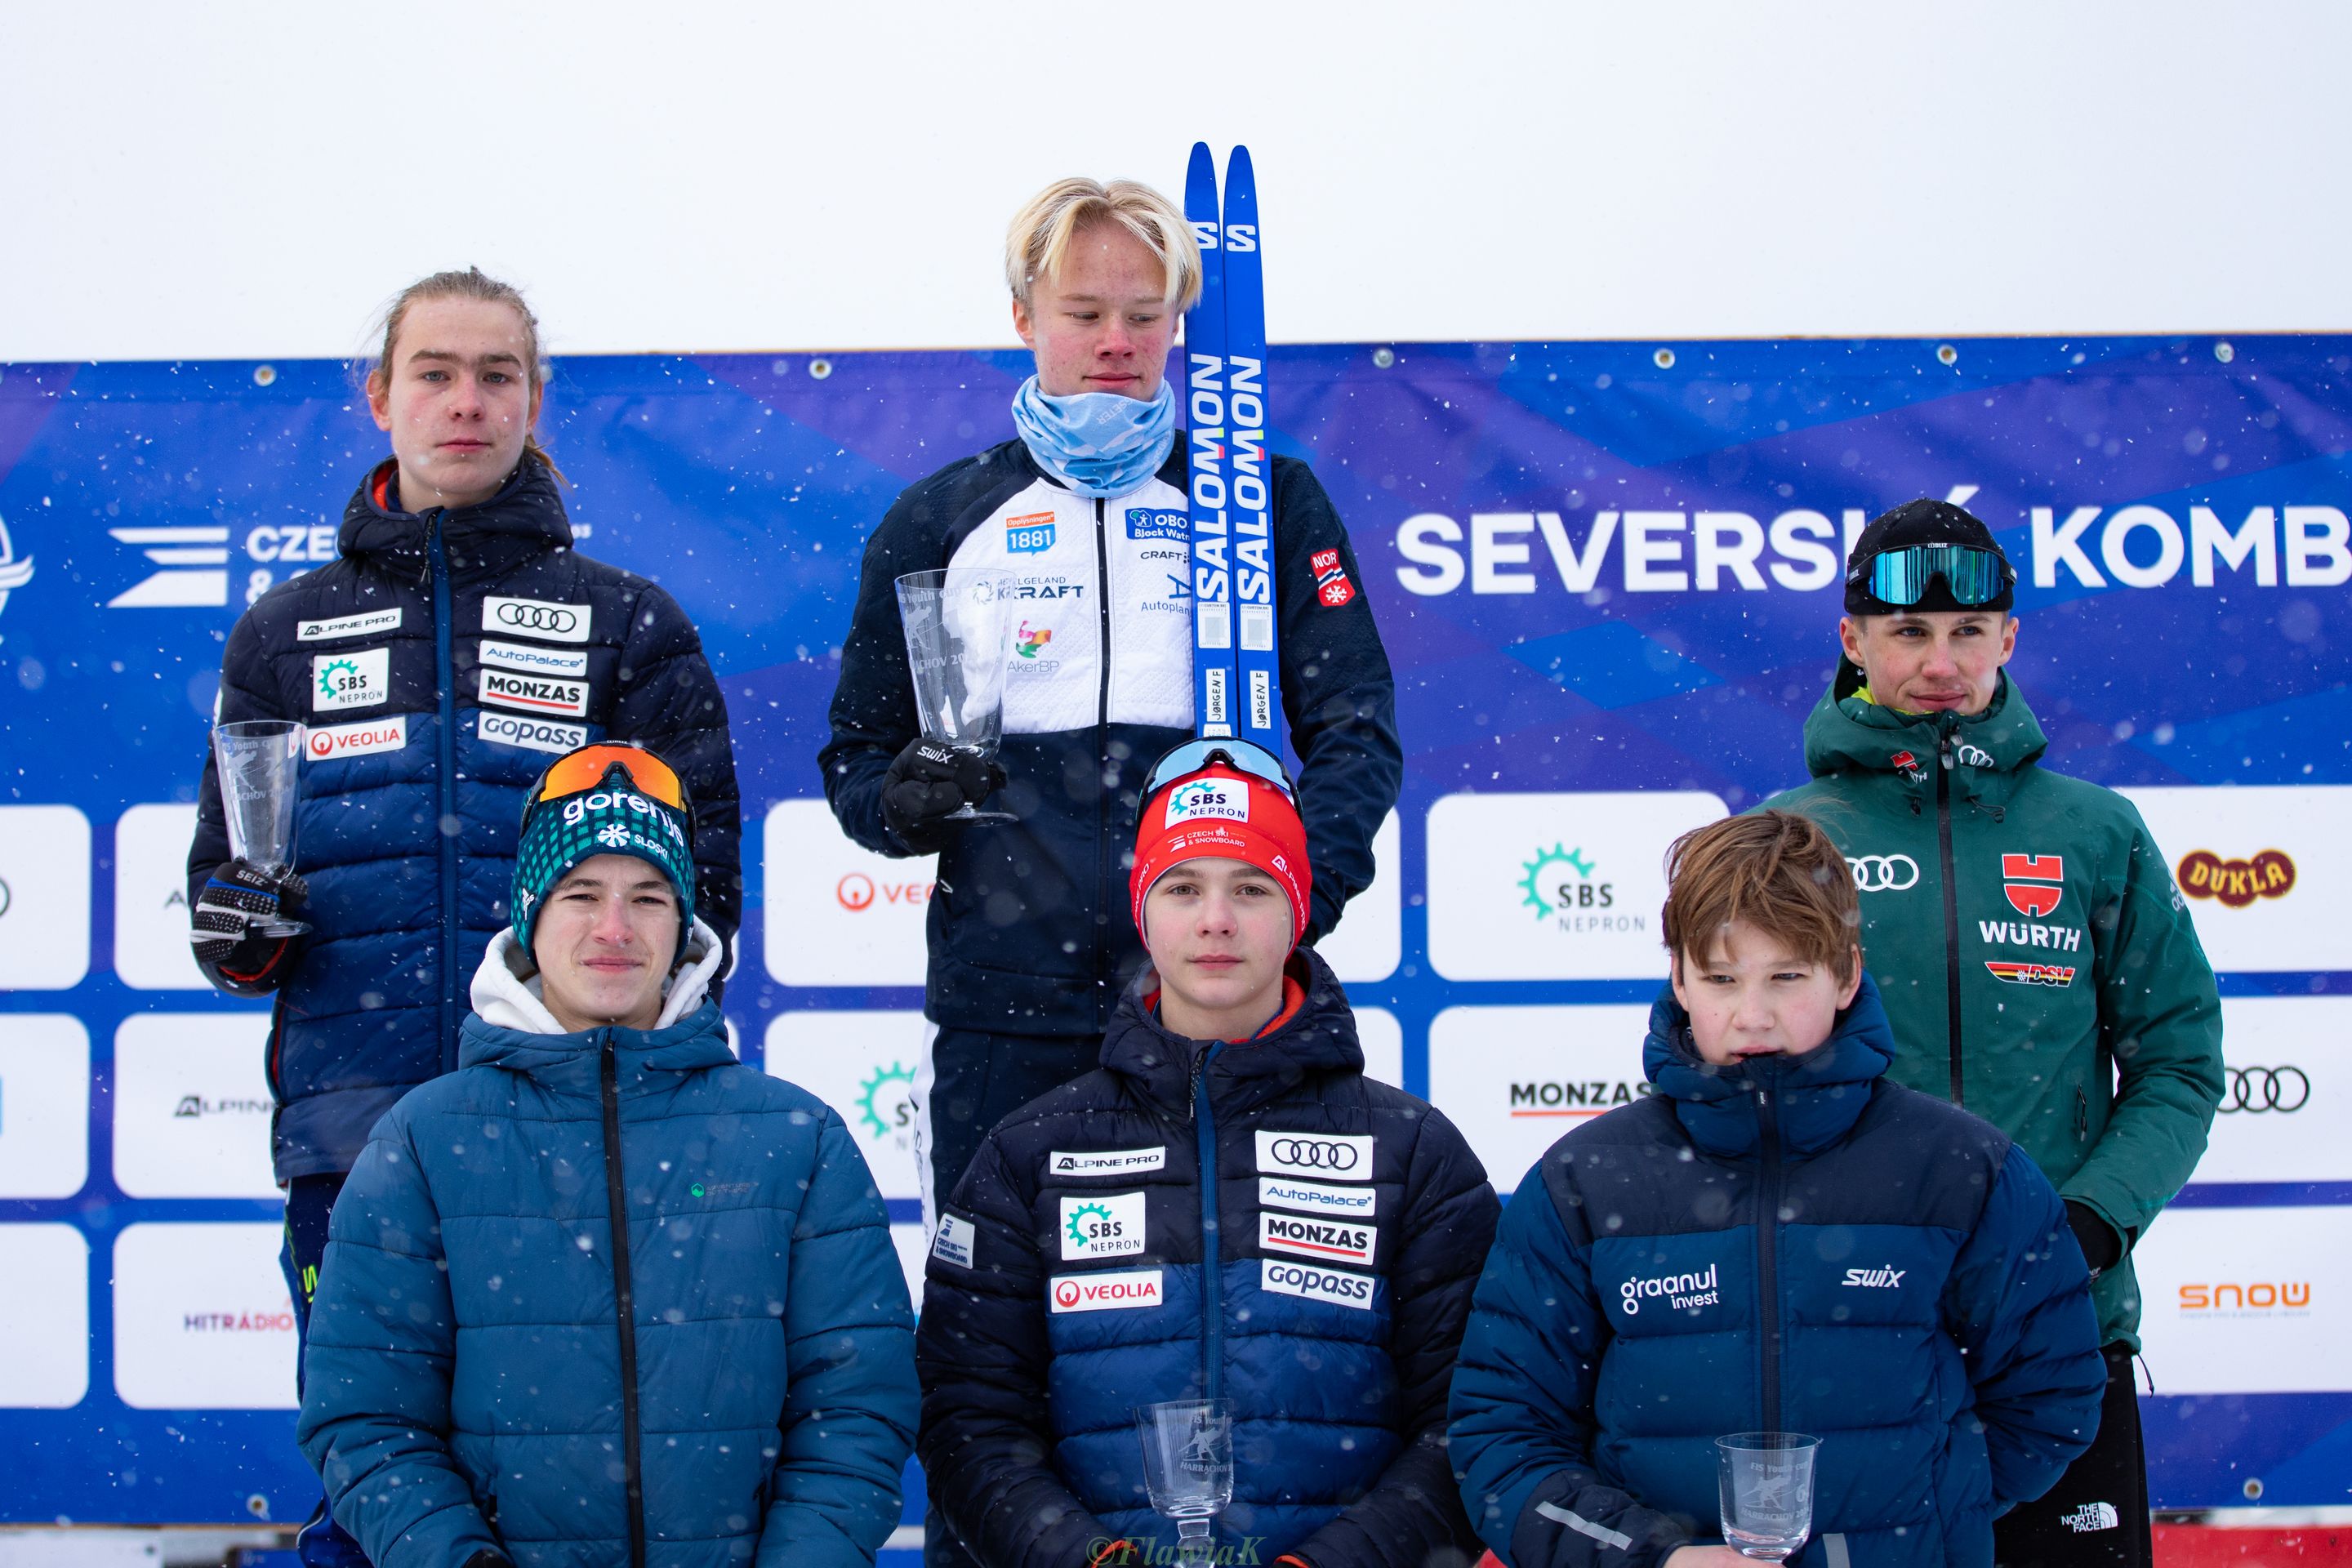 The Boys I podium with winner Joergen Furfjord (NOR) (c) Flawia Krawczyk